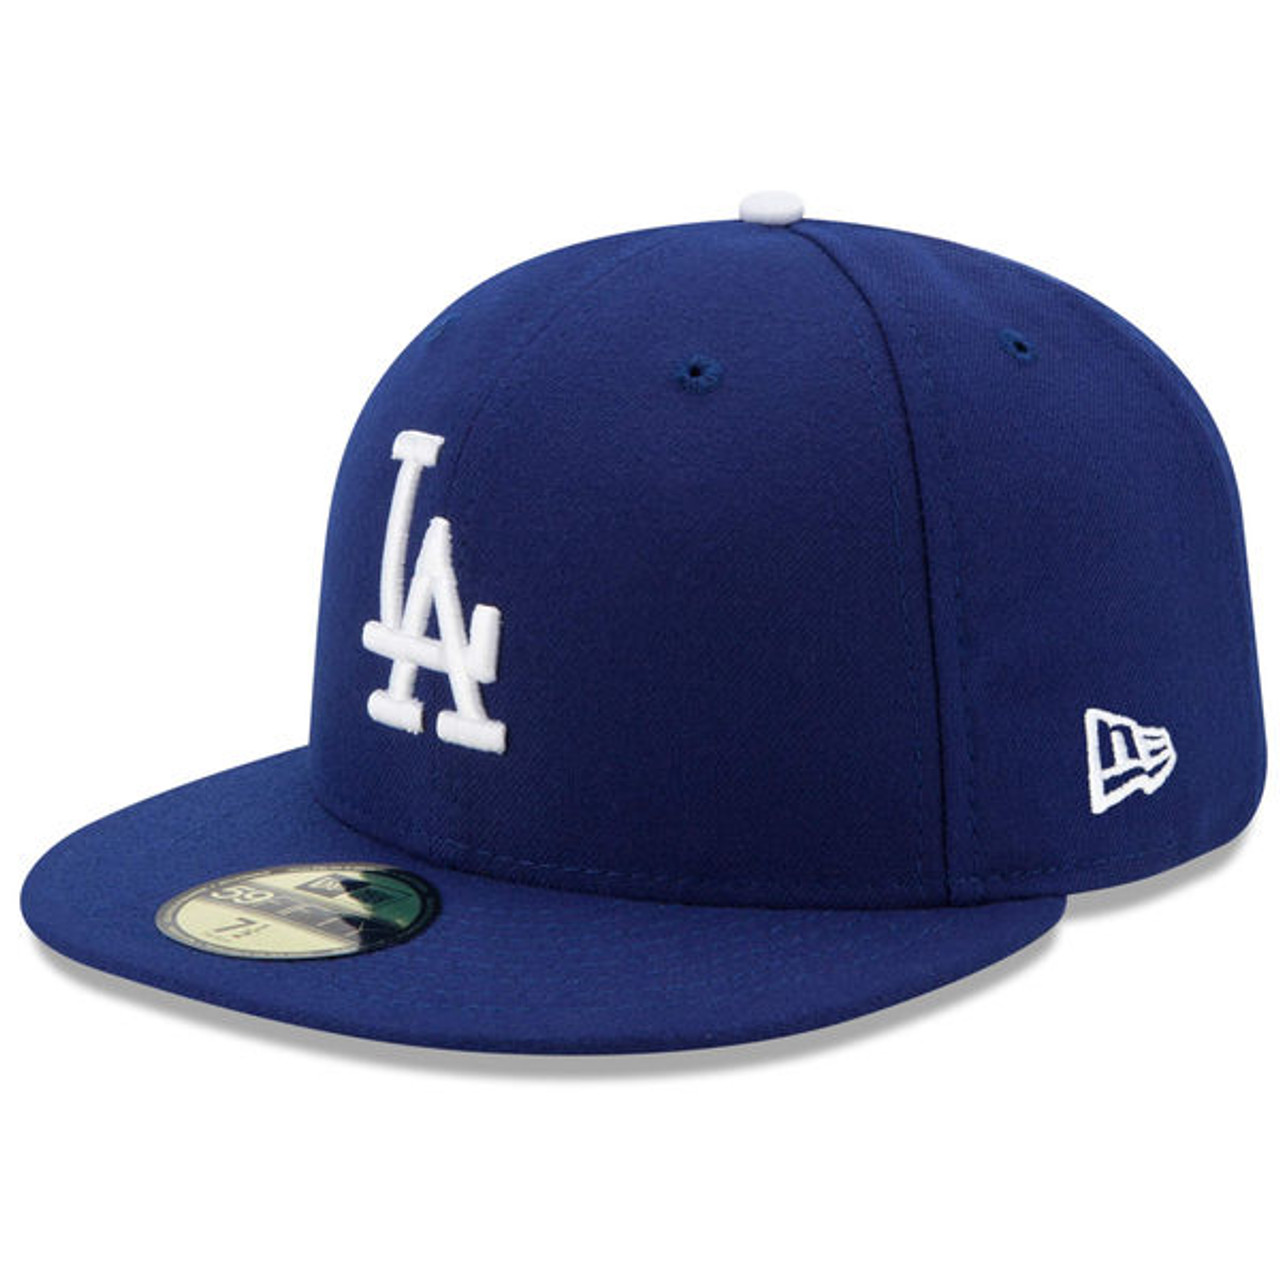 Vintage LA Dodgers Sweater Hoodie Sz M USA MLB Dodgers Official Baseball  Blue